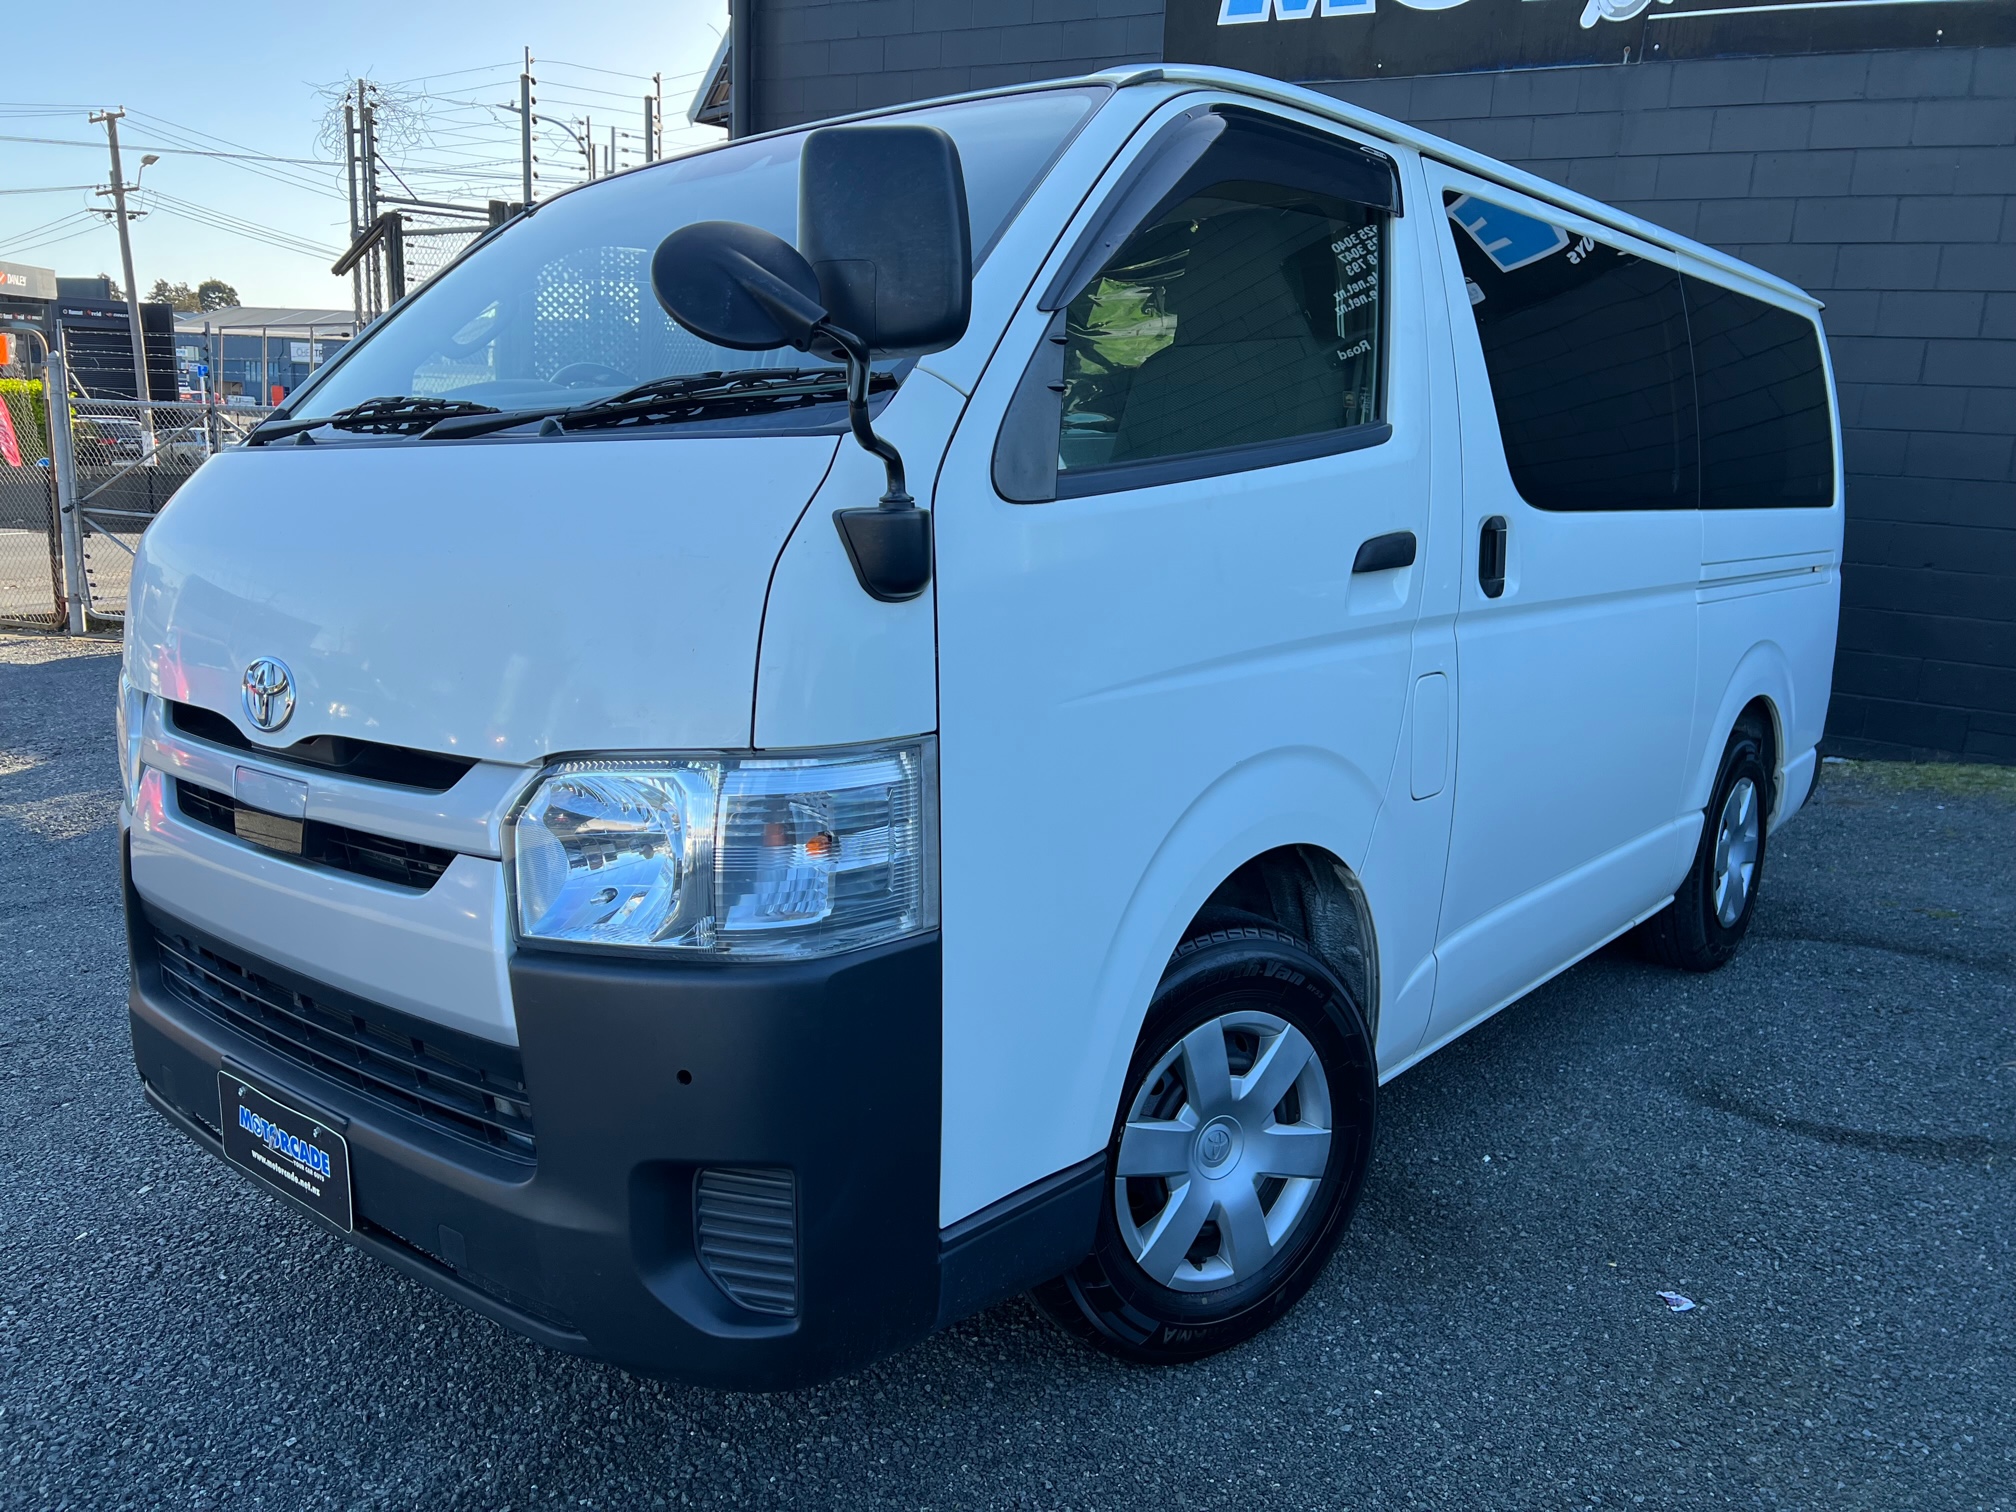 Toyota Hiace 2018 Image 1